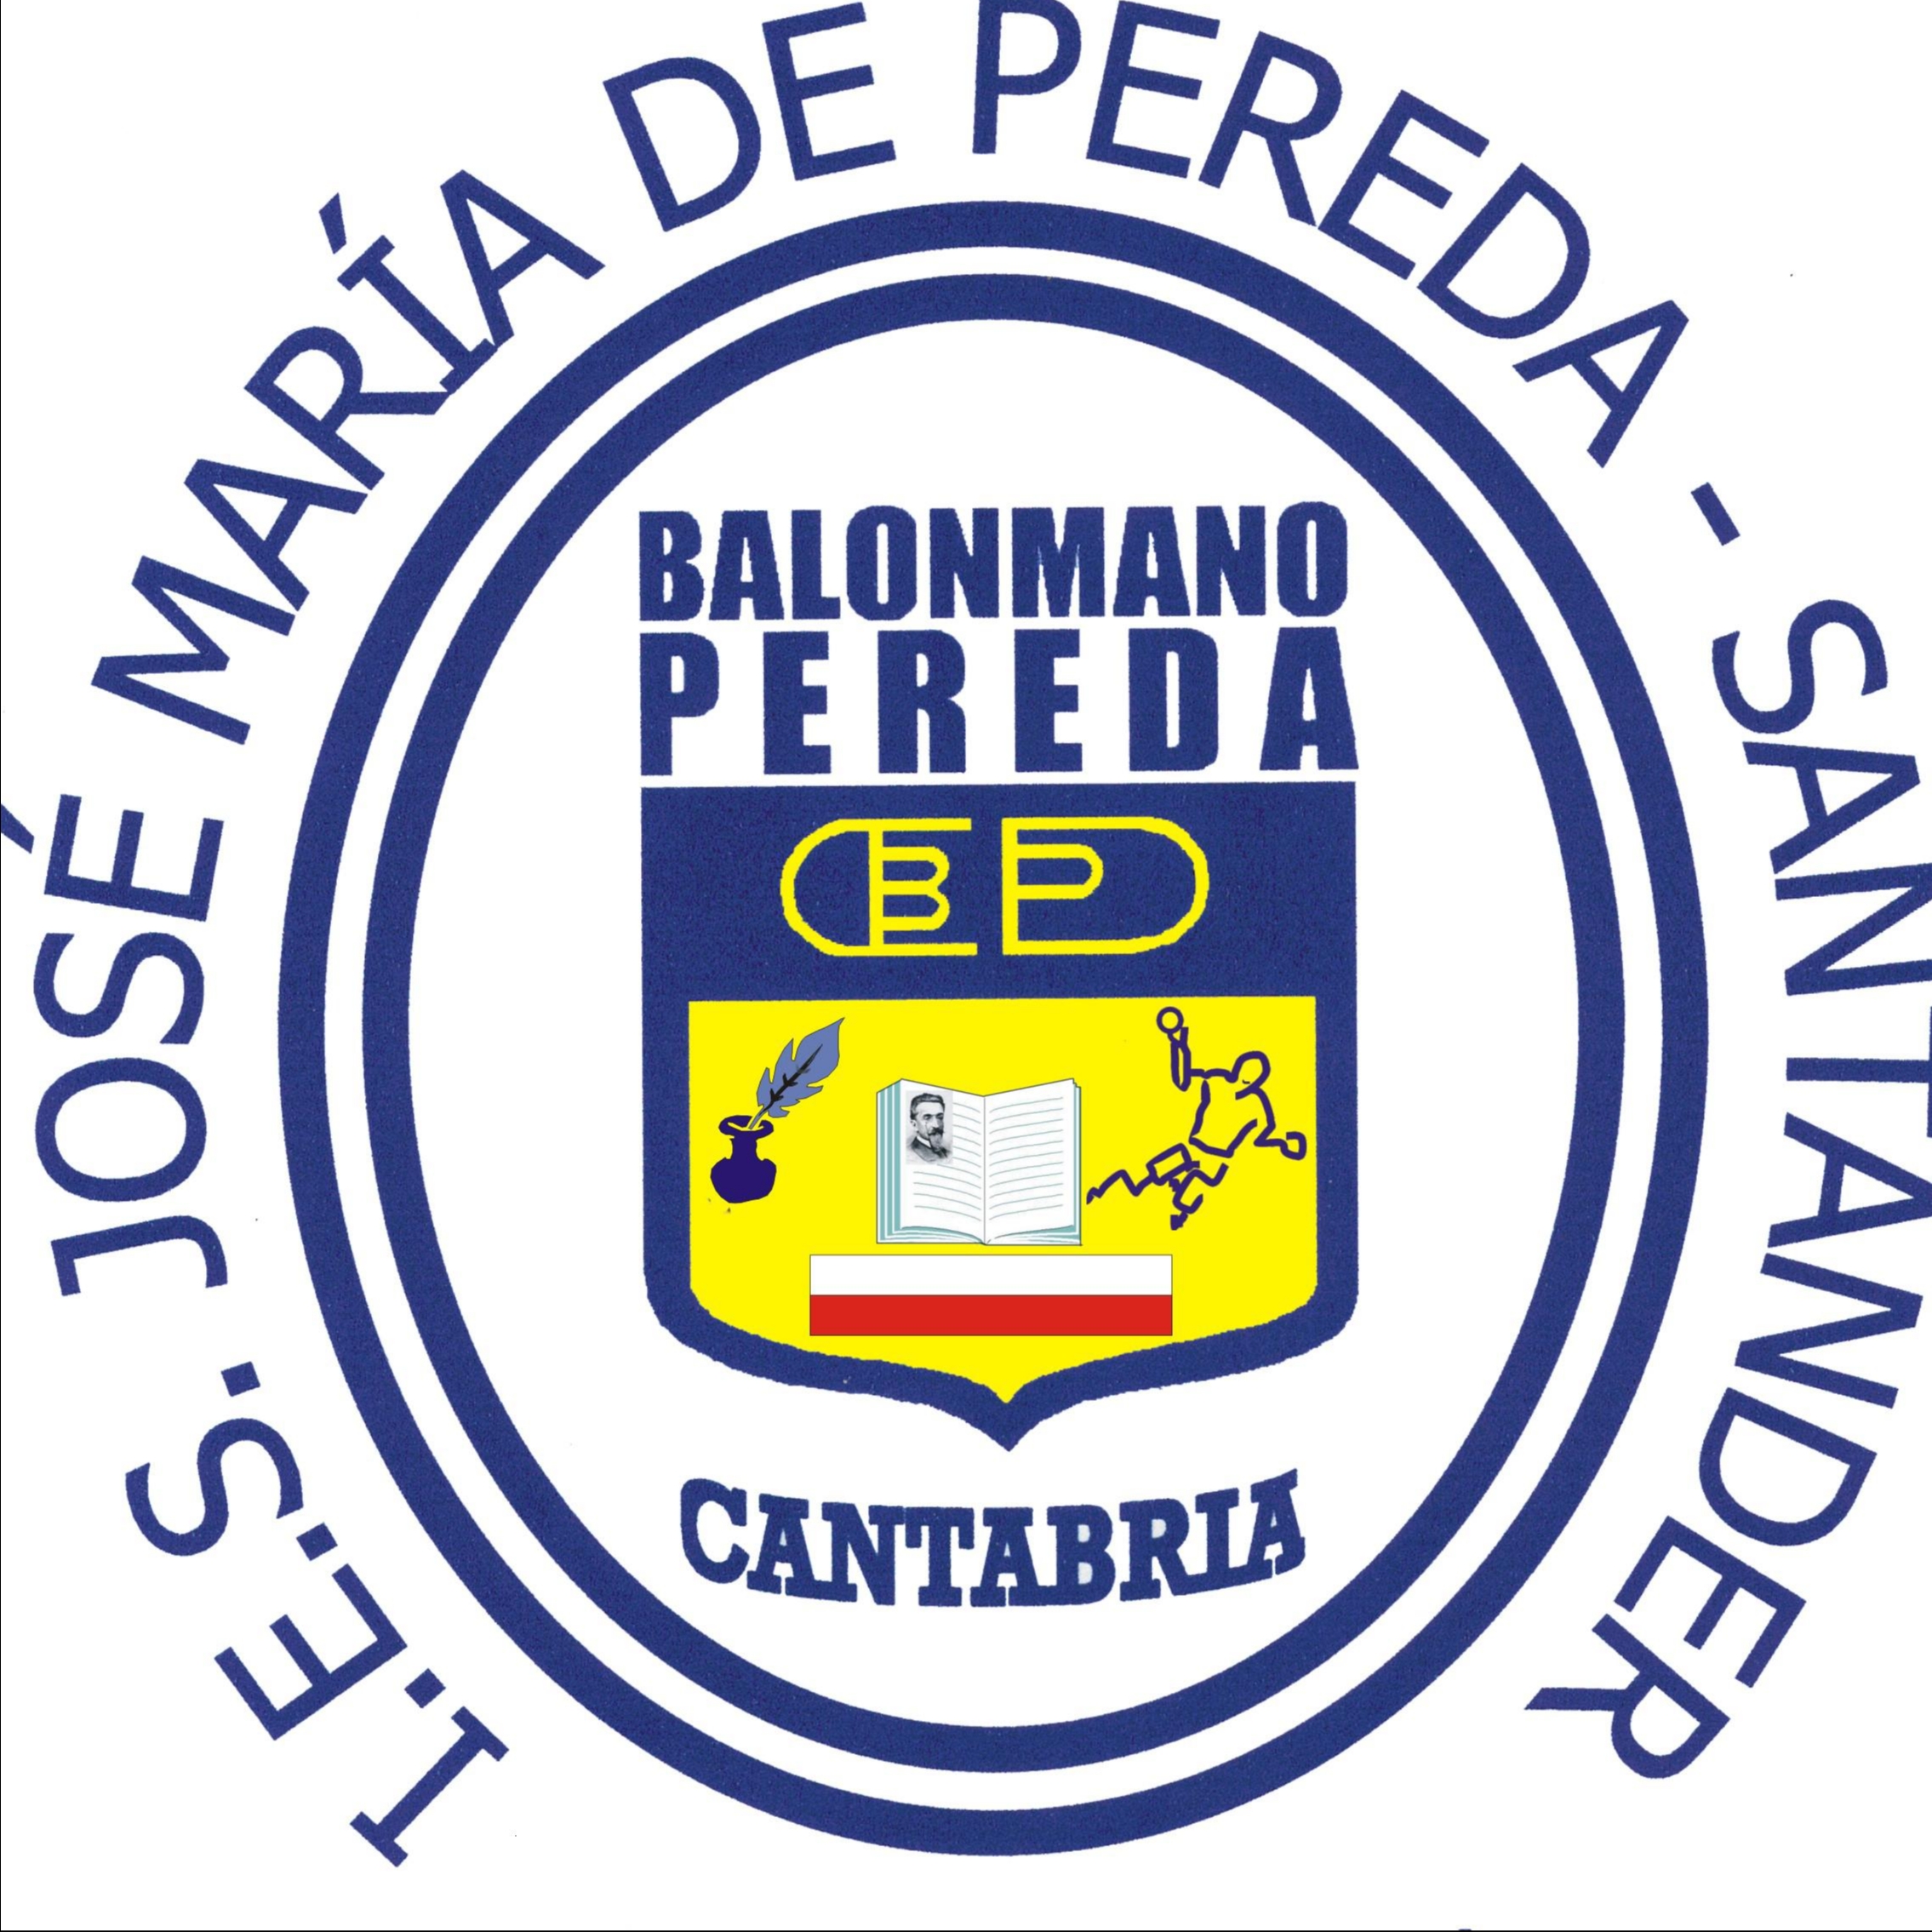 C. BALONMANO PEREDA